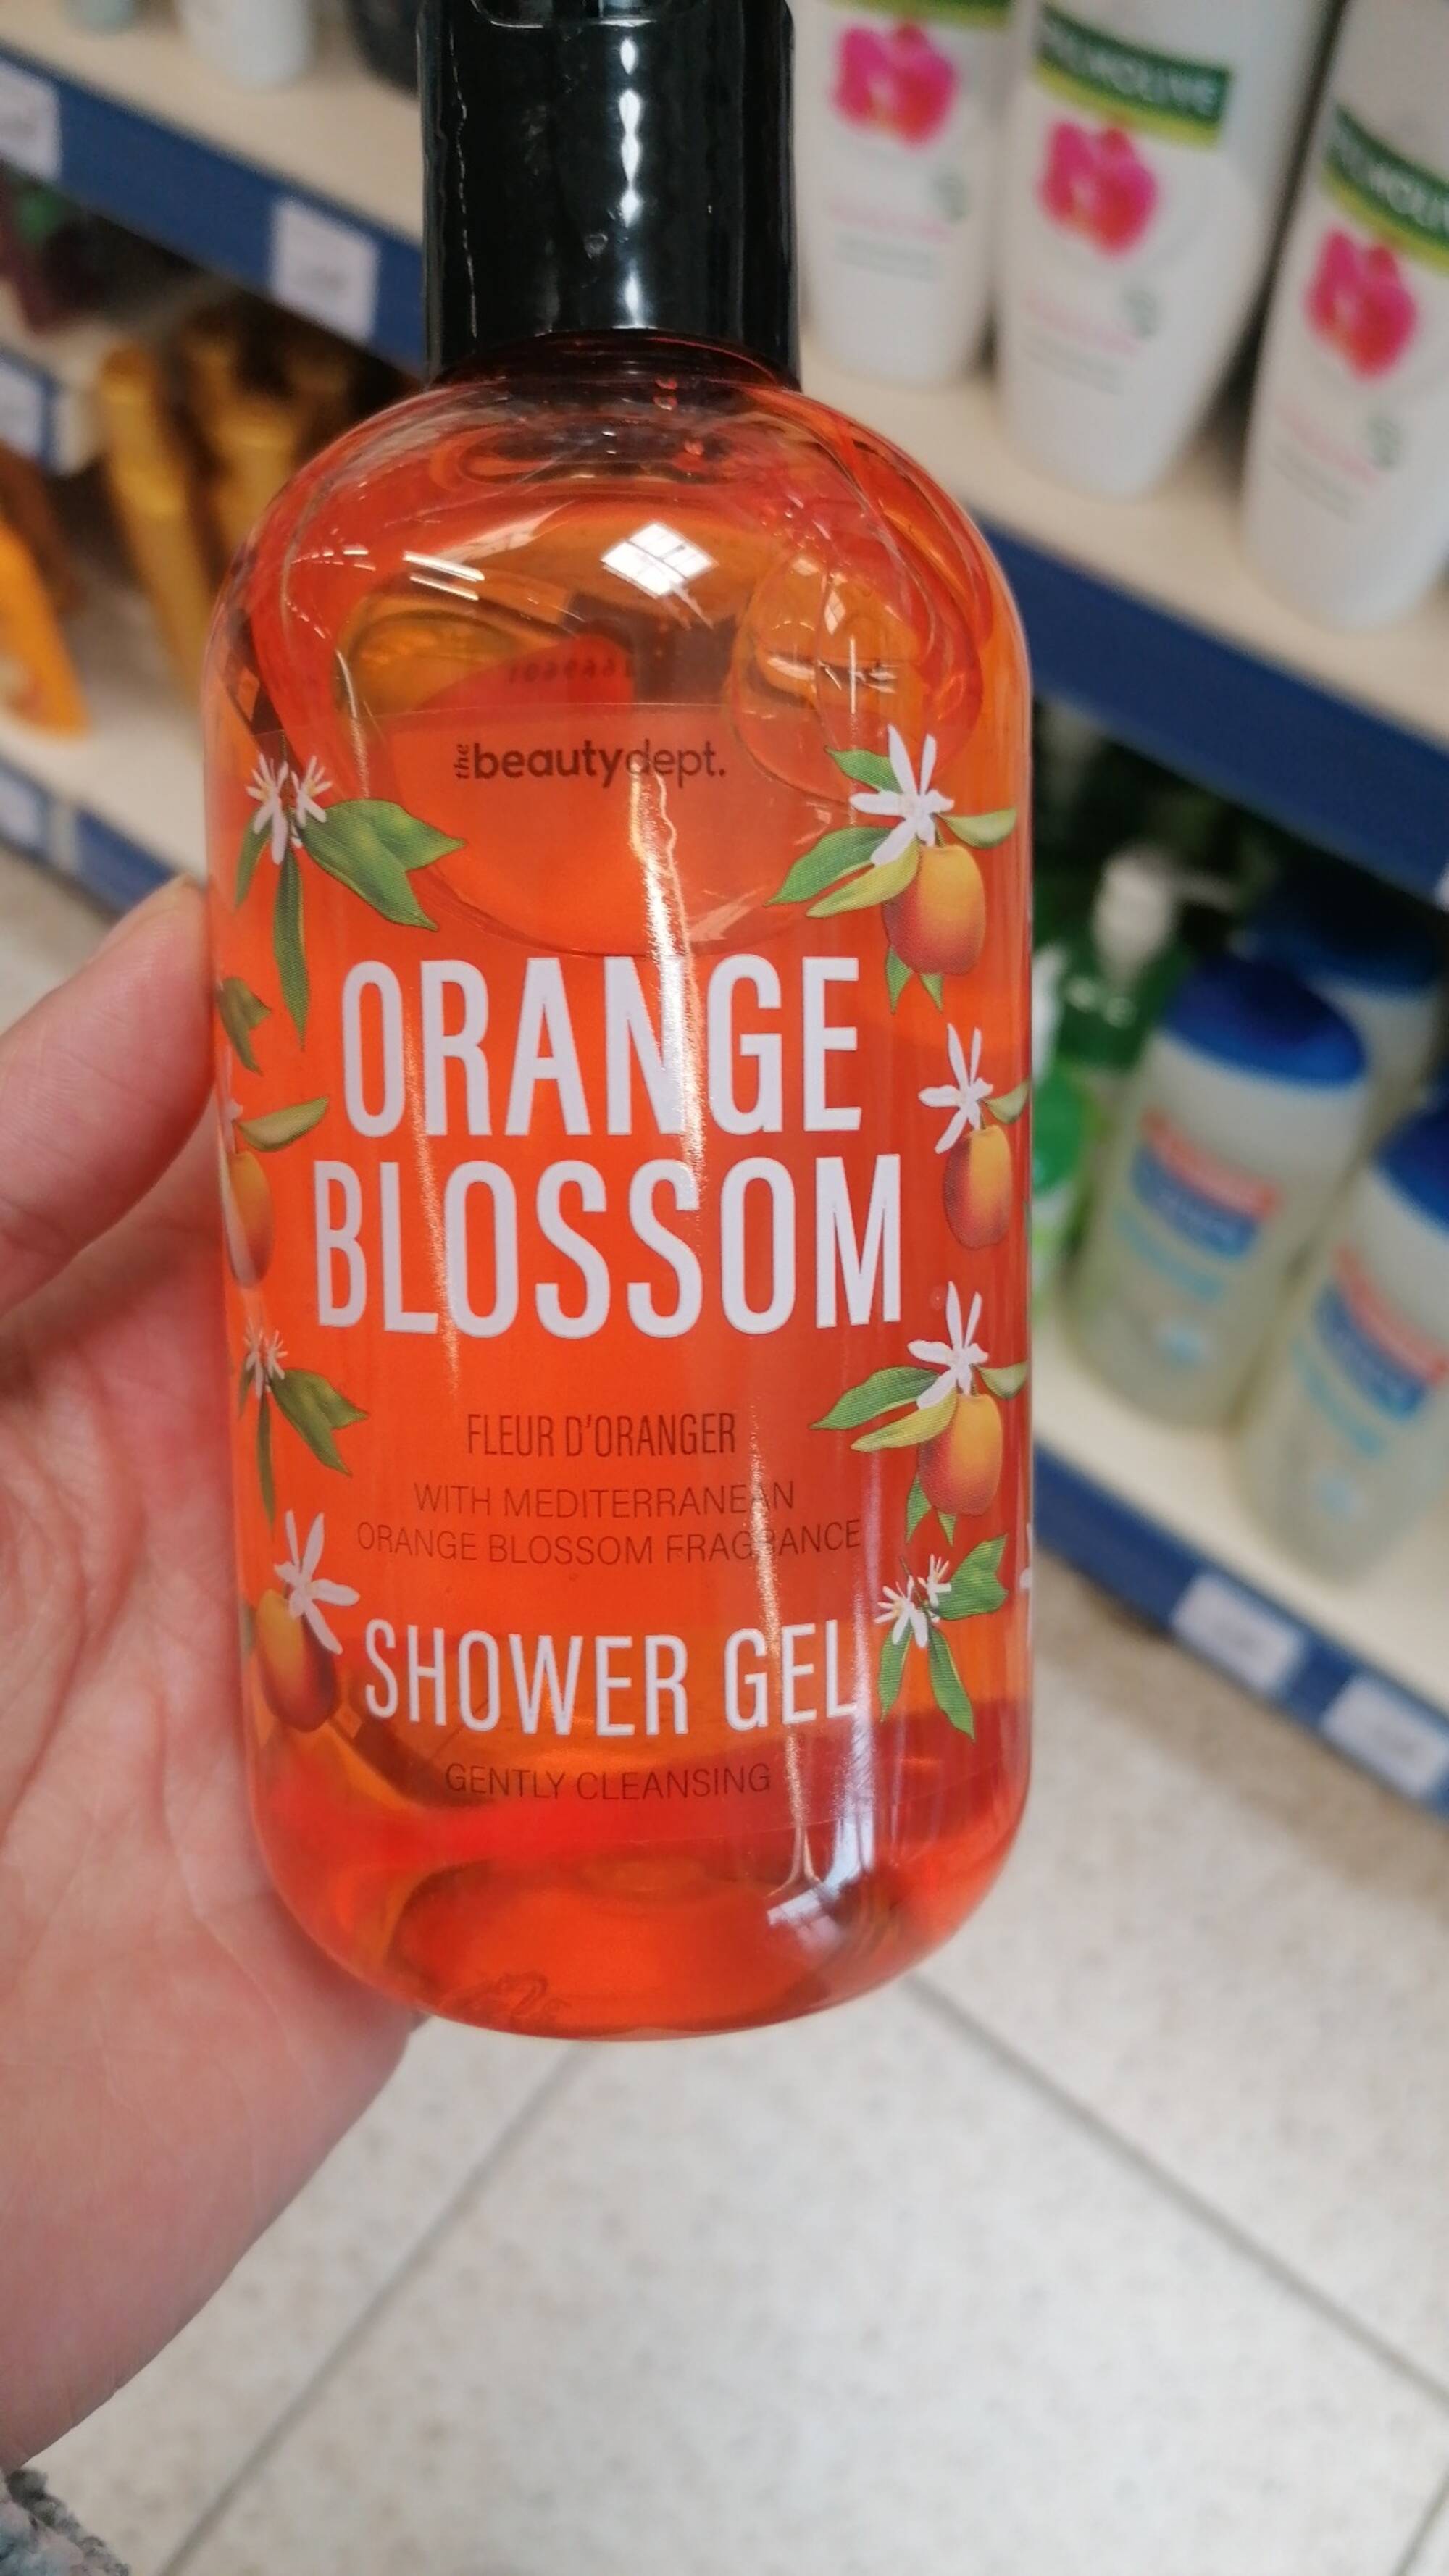 THE BEAUTY DEPT - Orange blossom - Shower gel